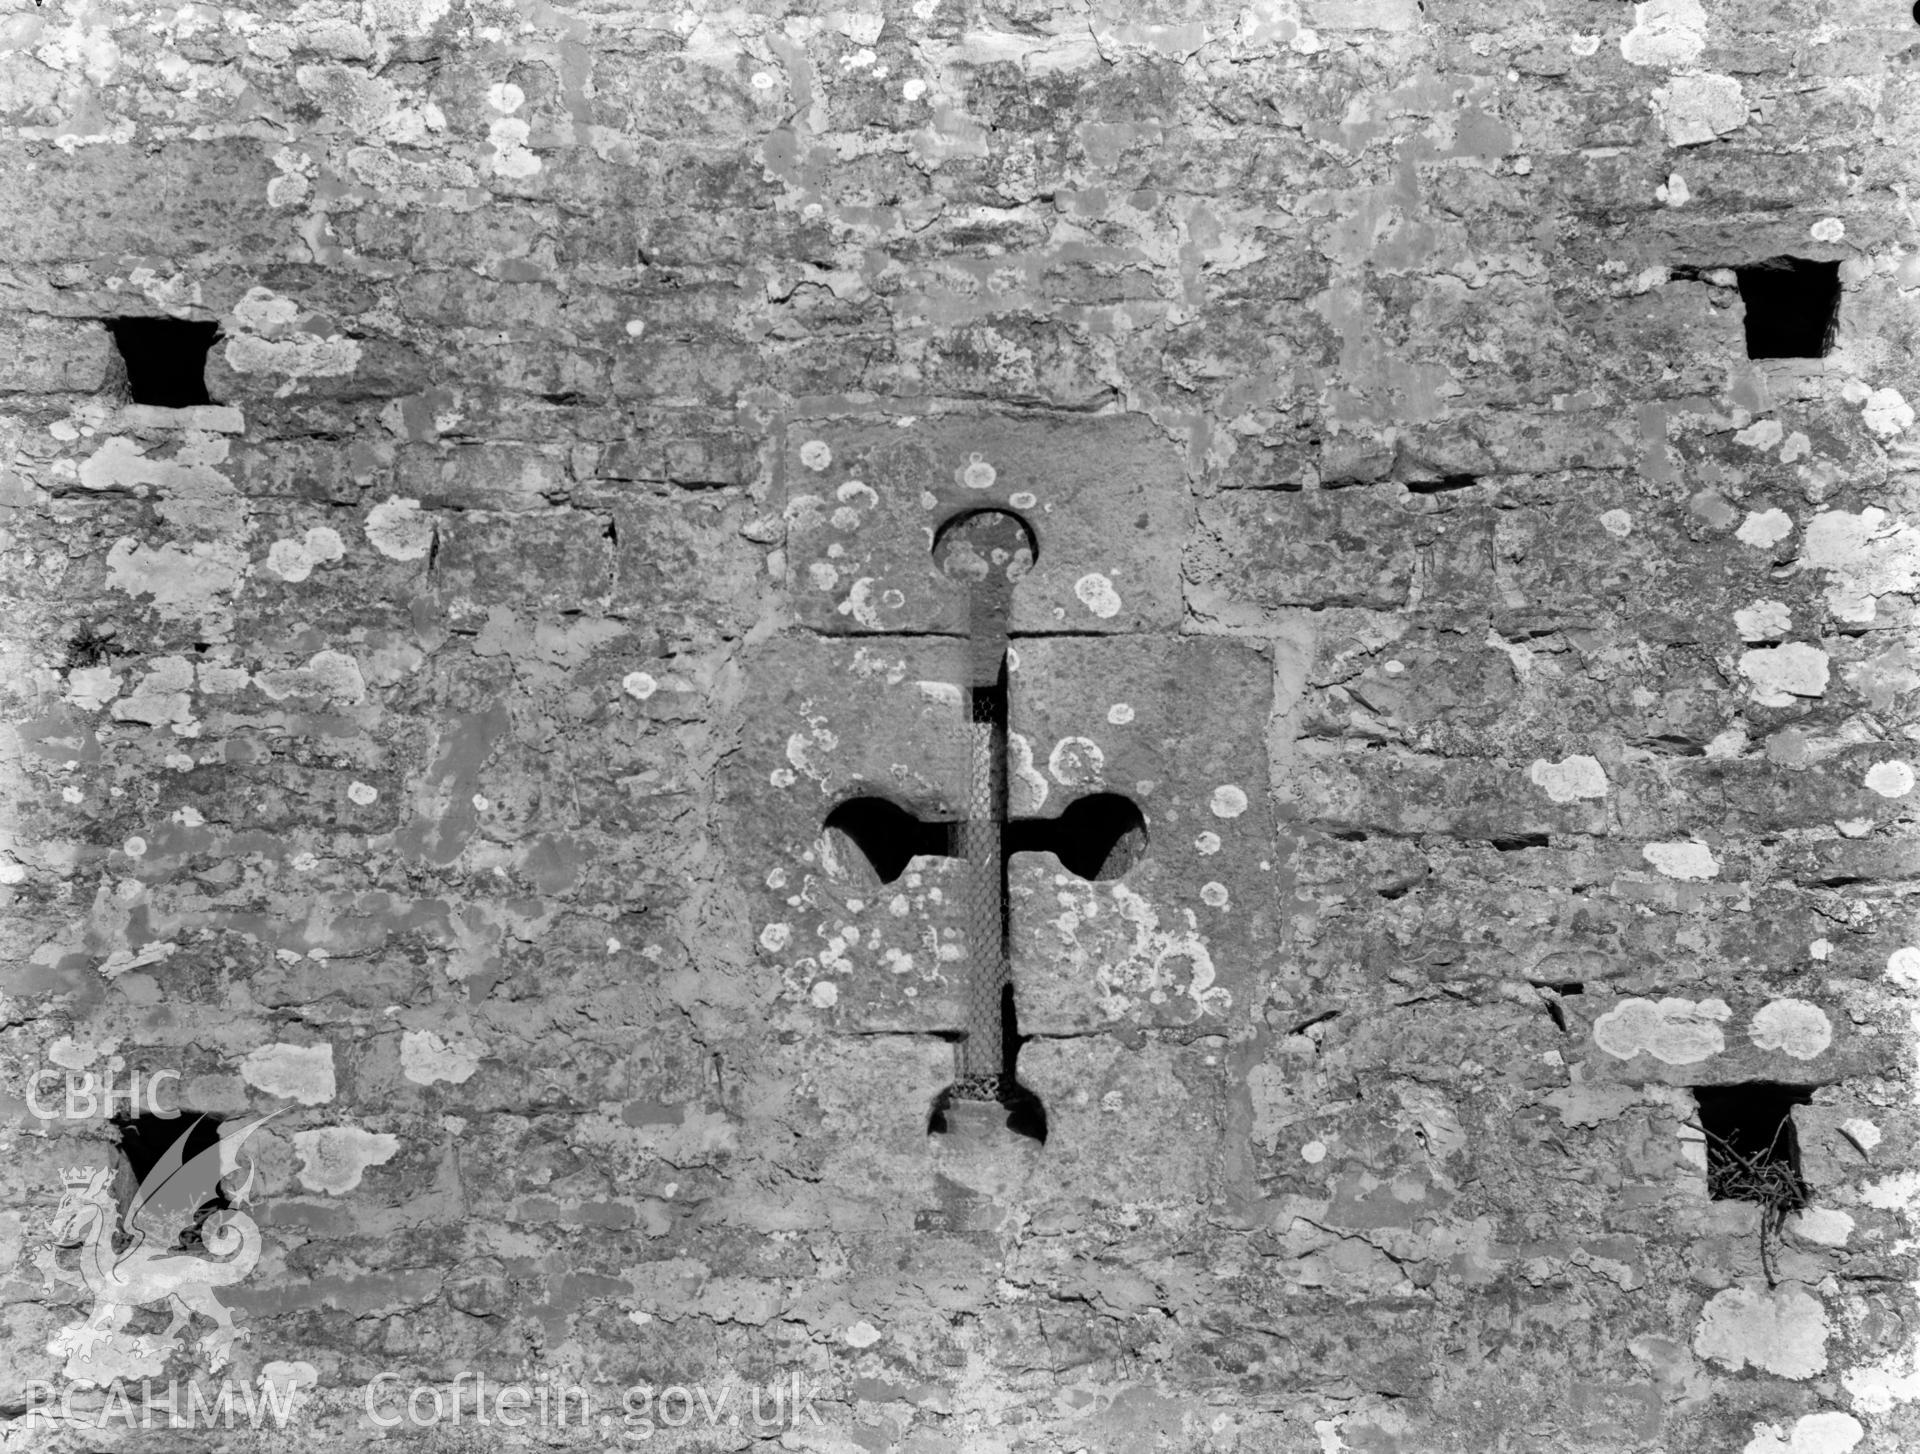 View of windows at St Michael's Church, Llanmihangel taken 07.04.65.